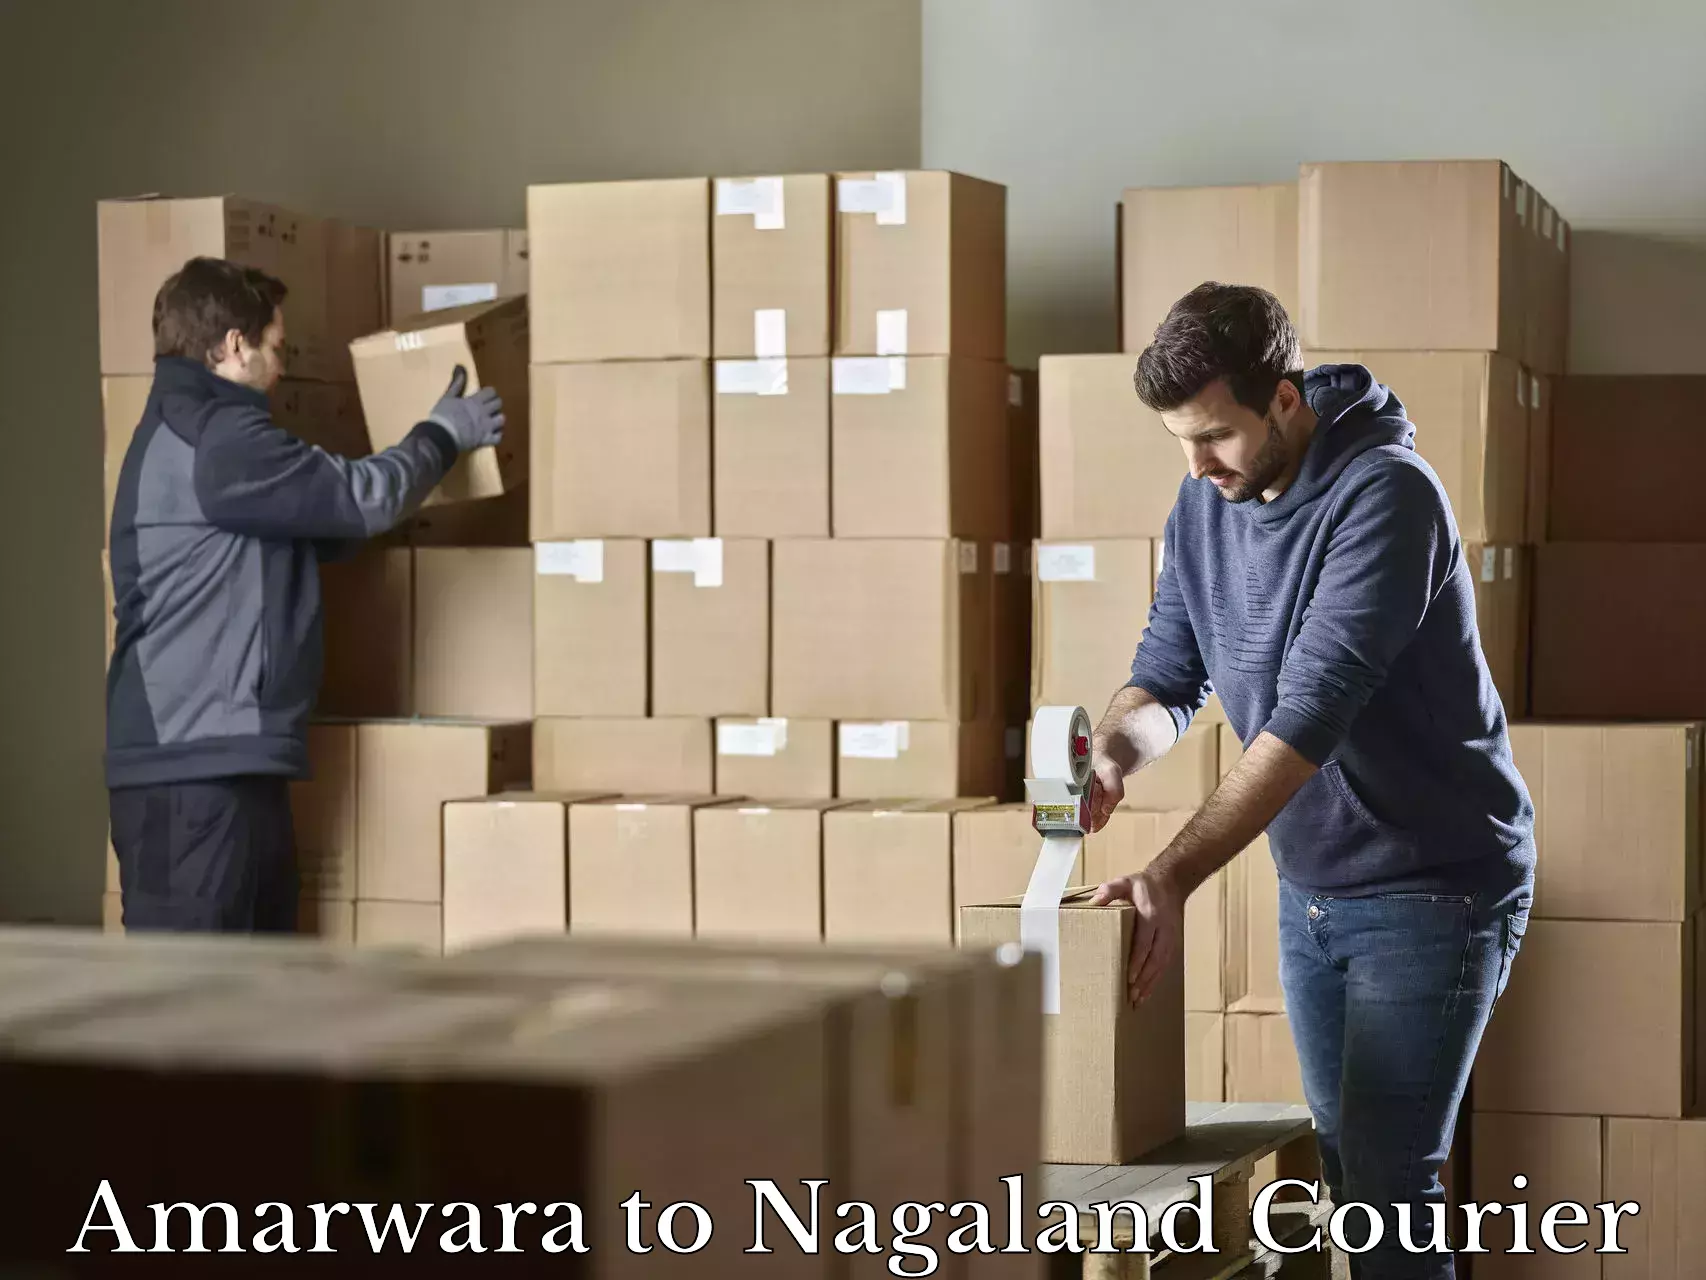 Luggage transport consultancy Amarwara to Nagaland